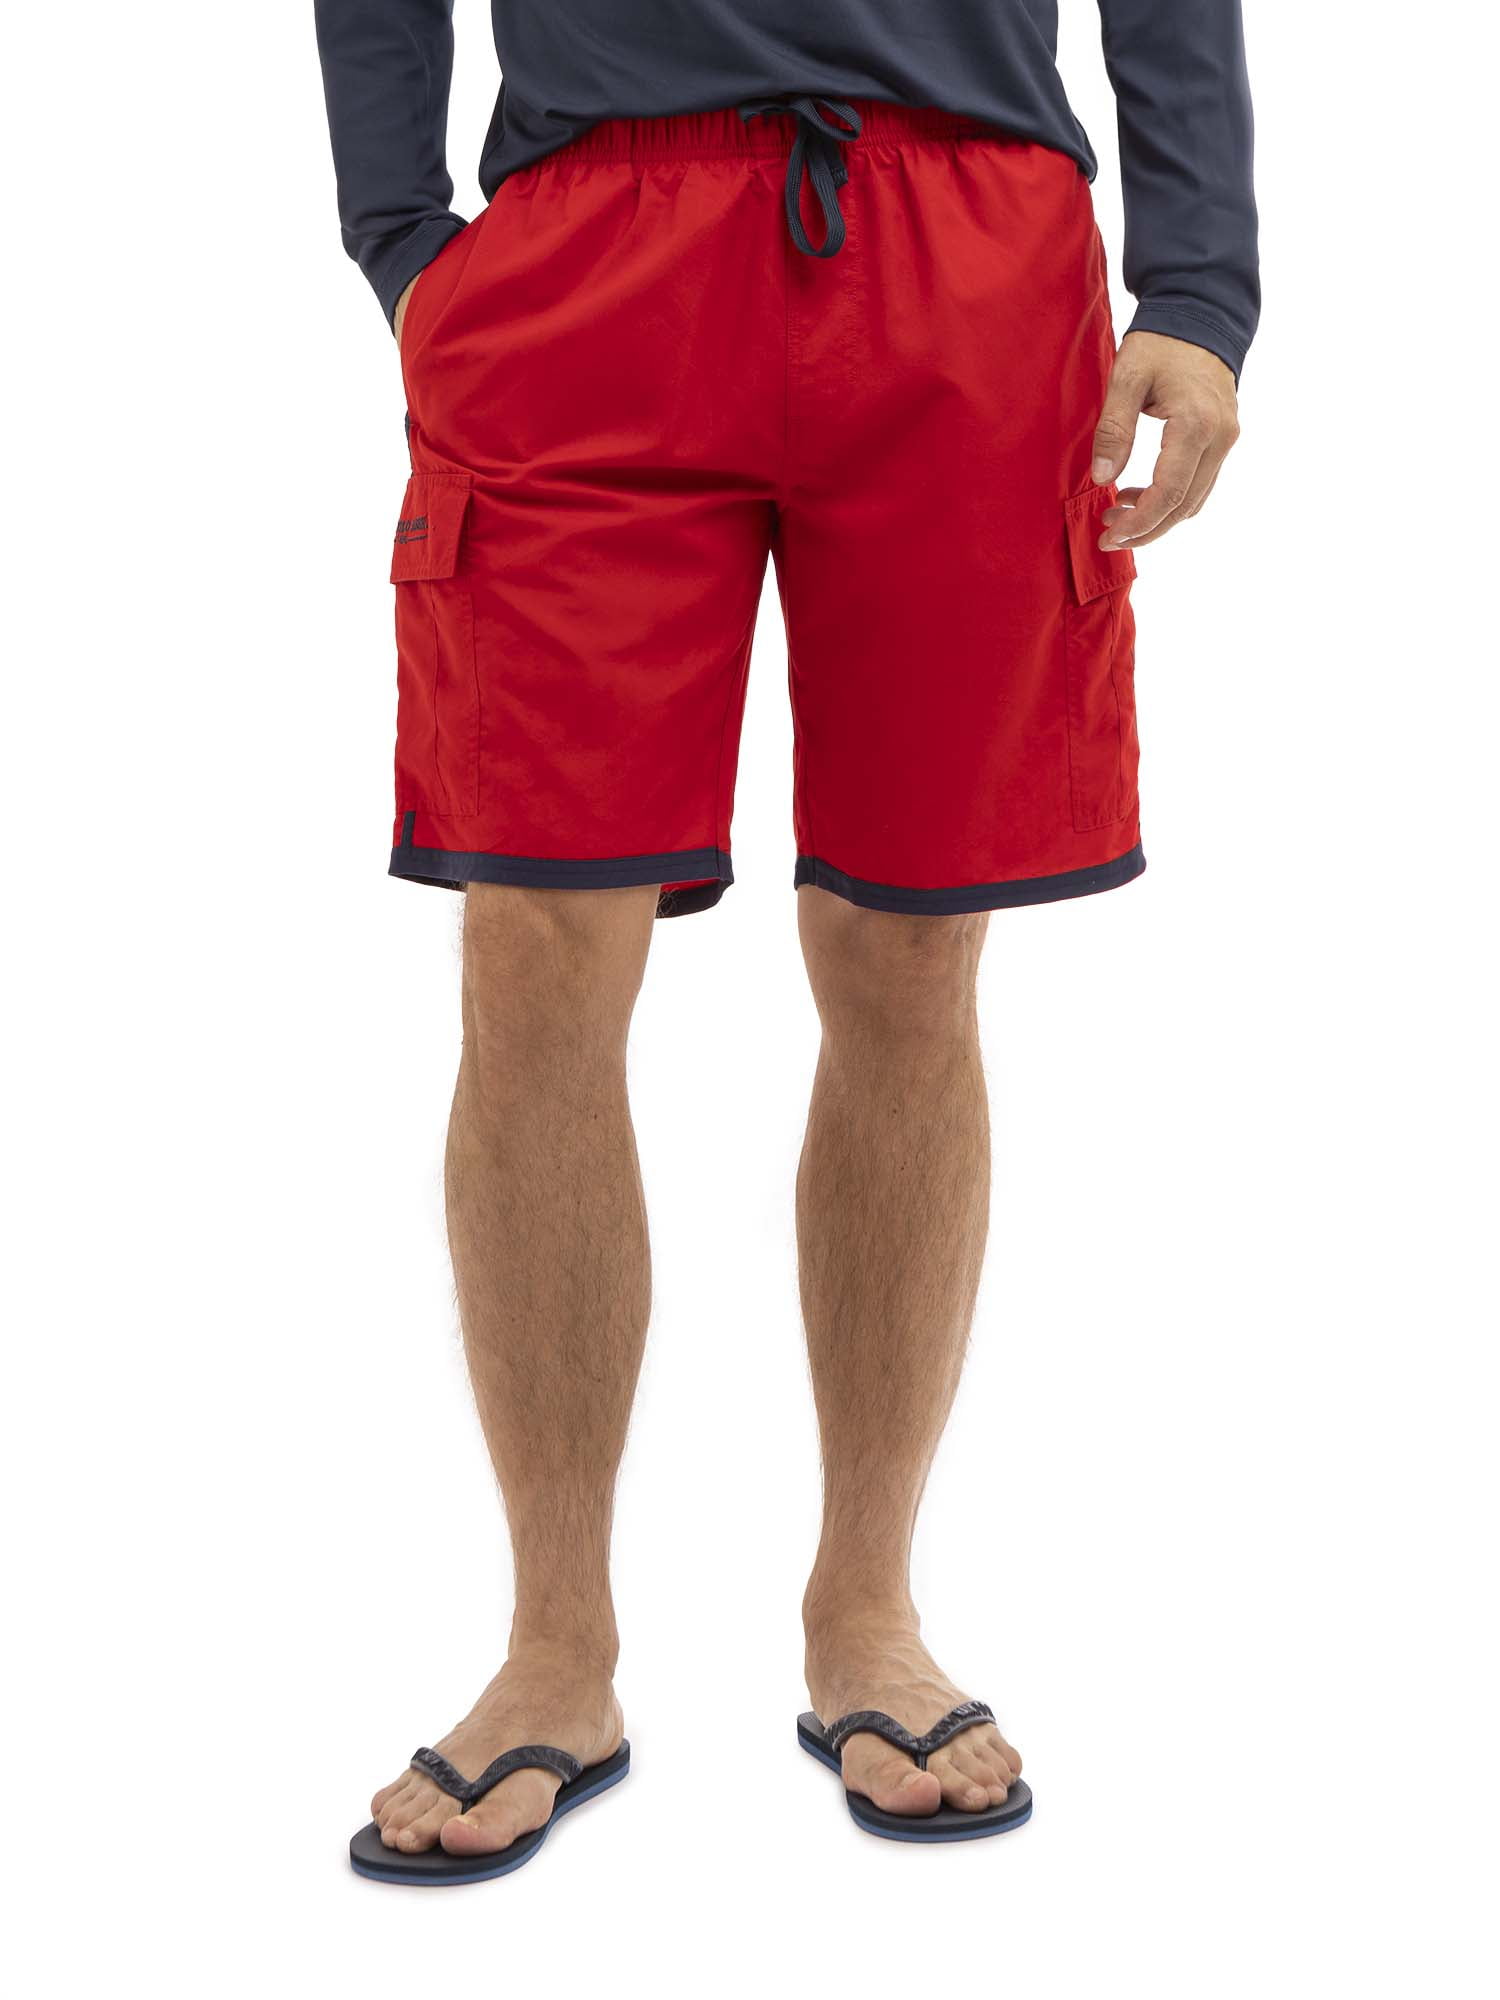 U.S. Polo Assn. Men's Cargo Swim Shorts, Sizes S-3XL - Walmart.com